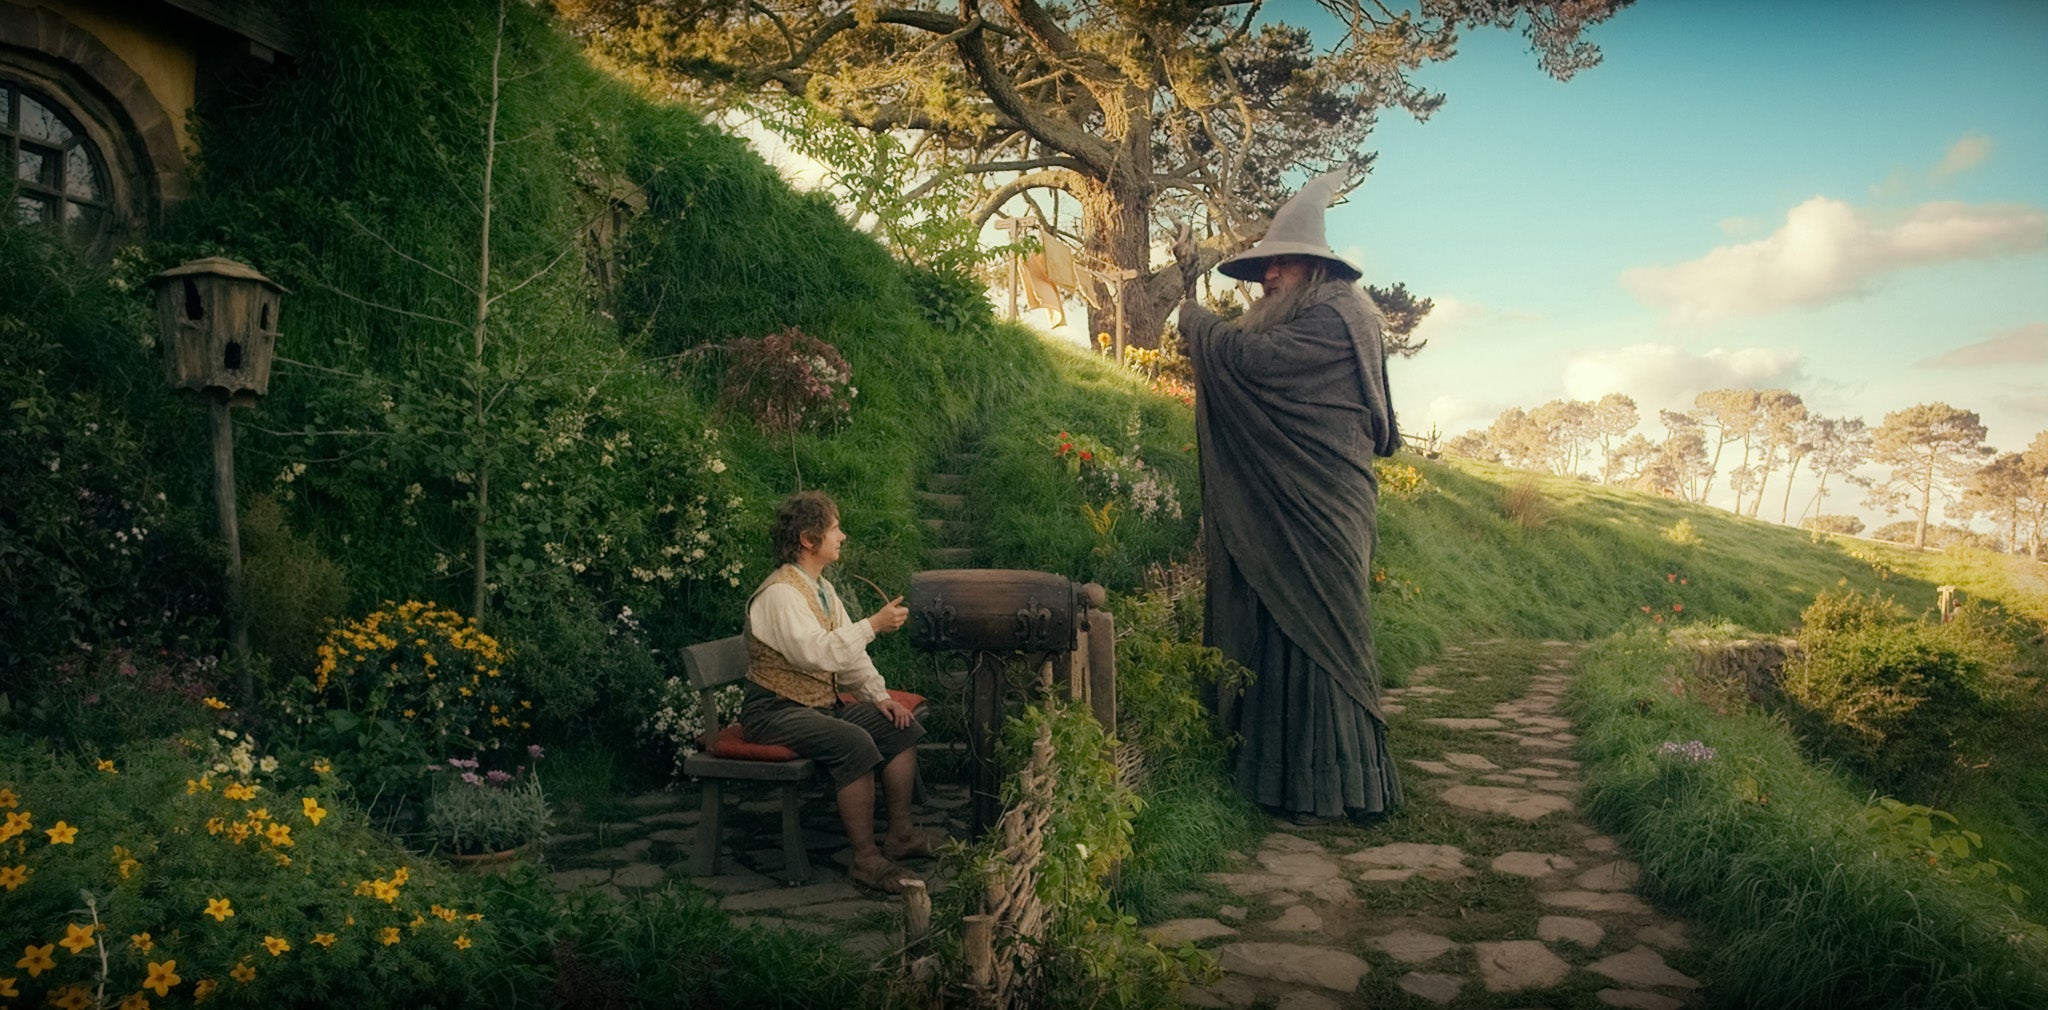 Martin Freeman as Bilbo Baggins and Ian McKellen as Gandalf in the fantasy adventure The Hobbit: An Unexpected Journey